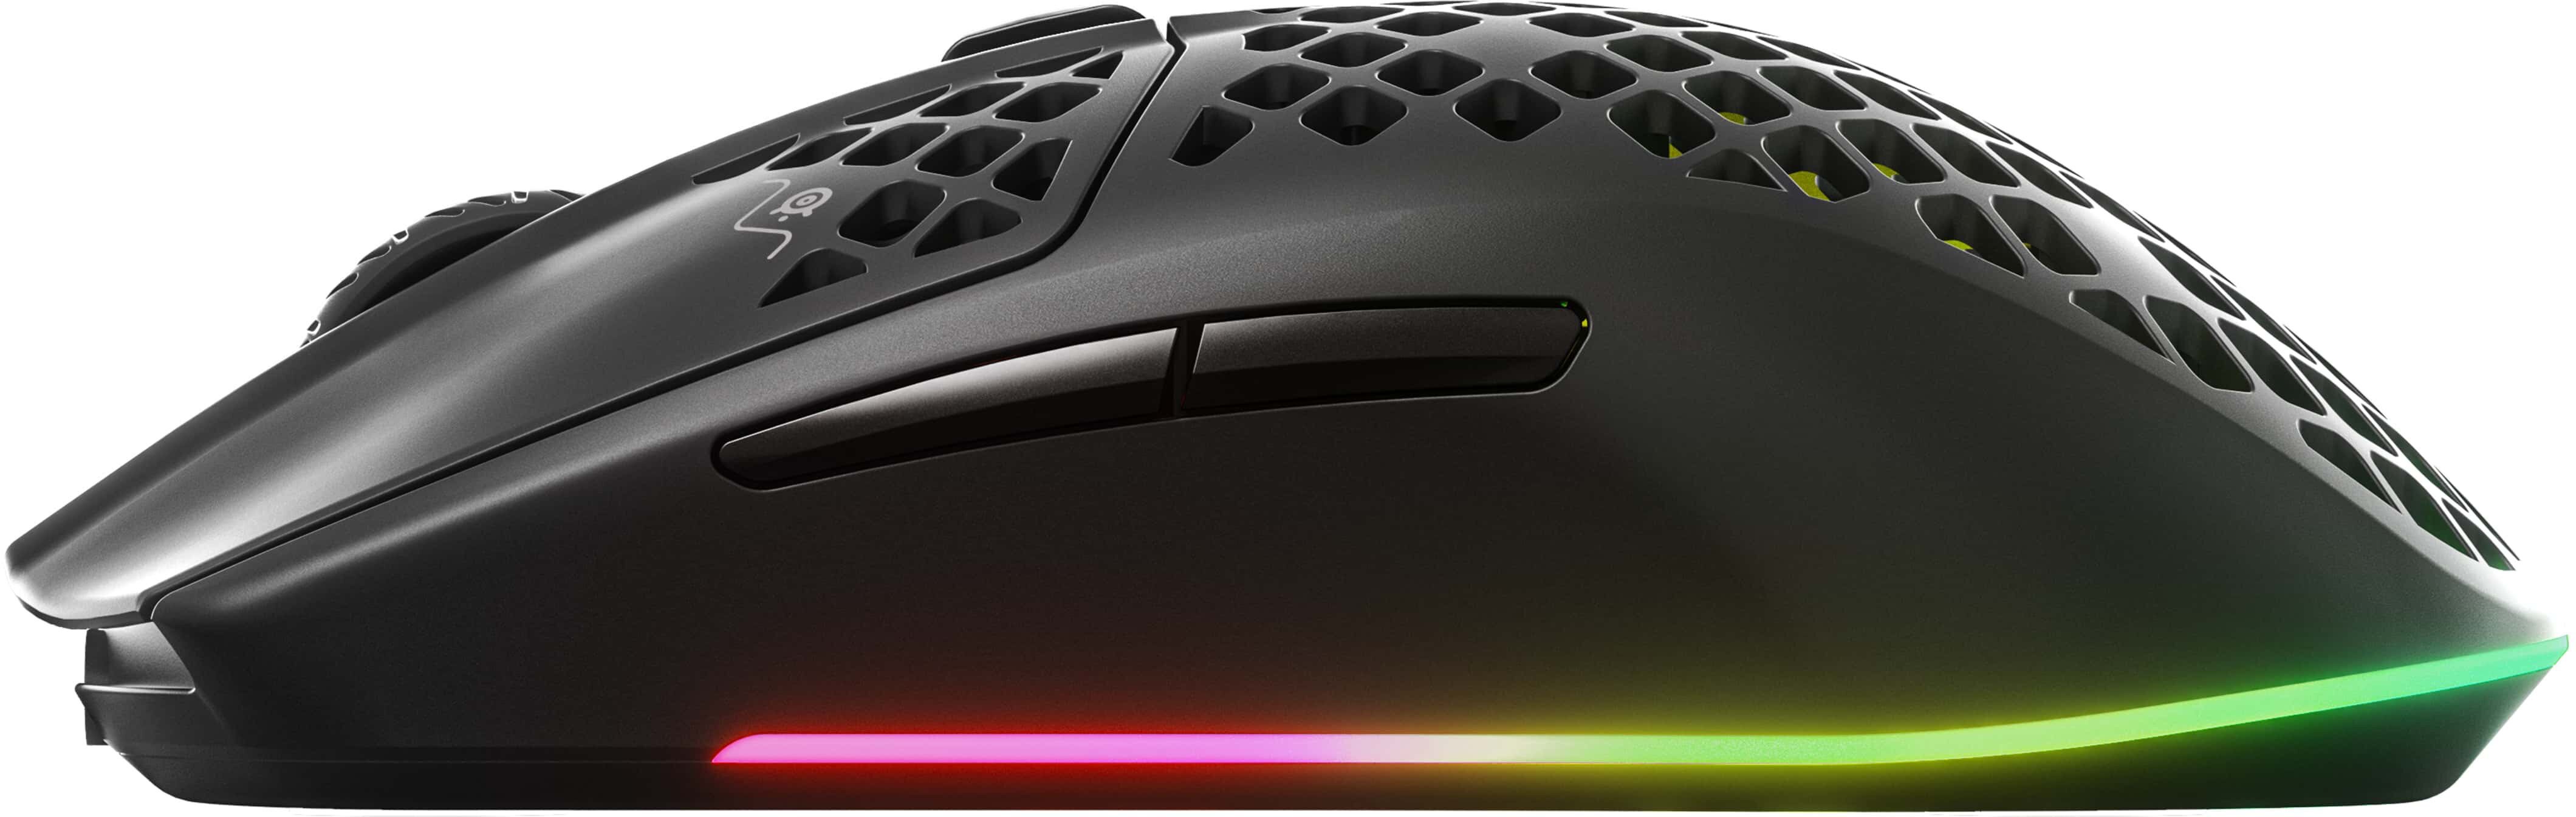 Buy SteelSeries Lightweight Onyx online Gaming Mouse 3 Ultra Wireless Aerox Edition Worldwide - 2022